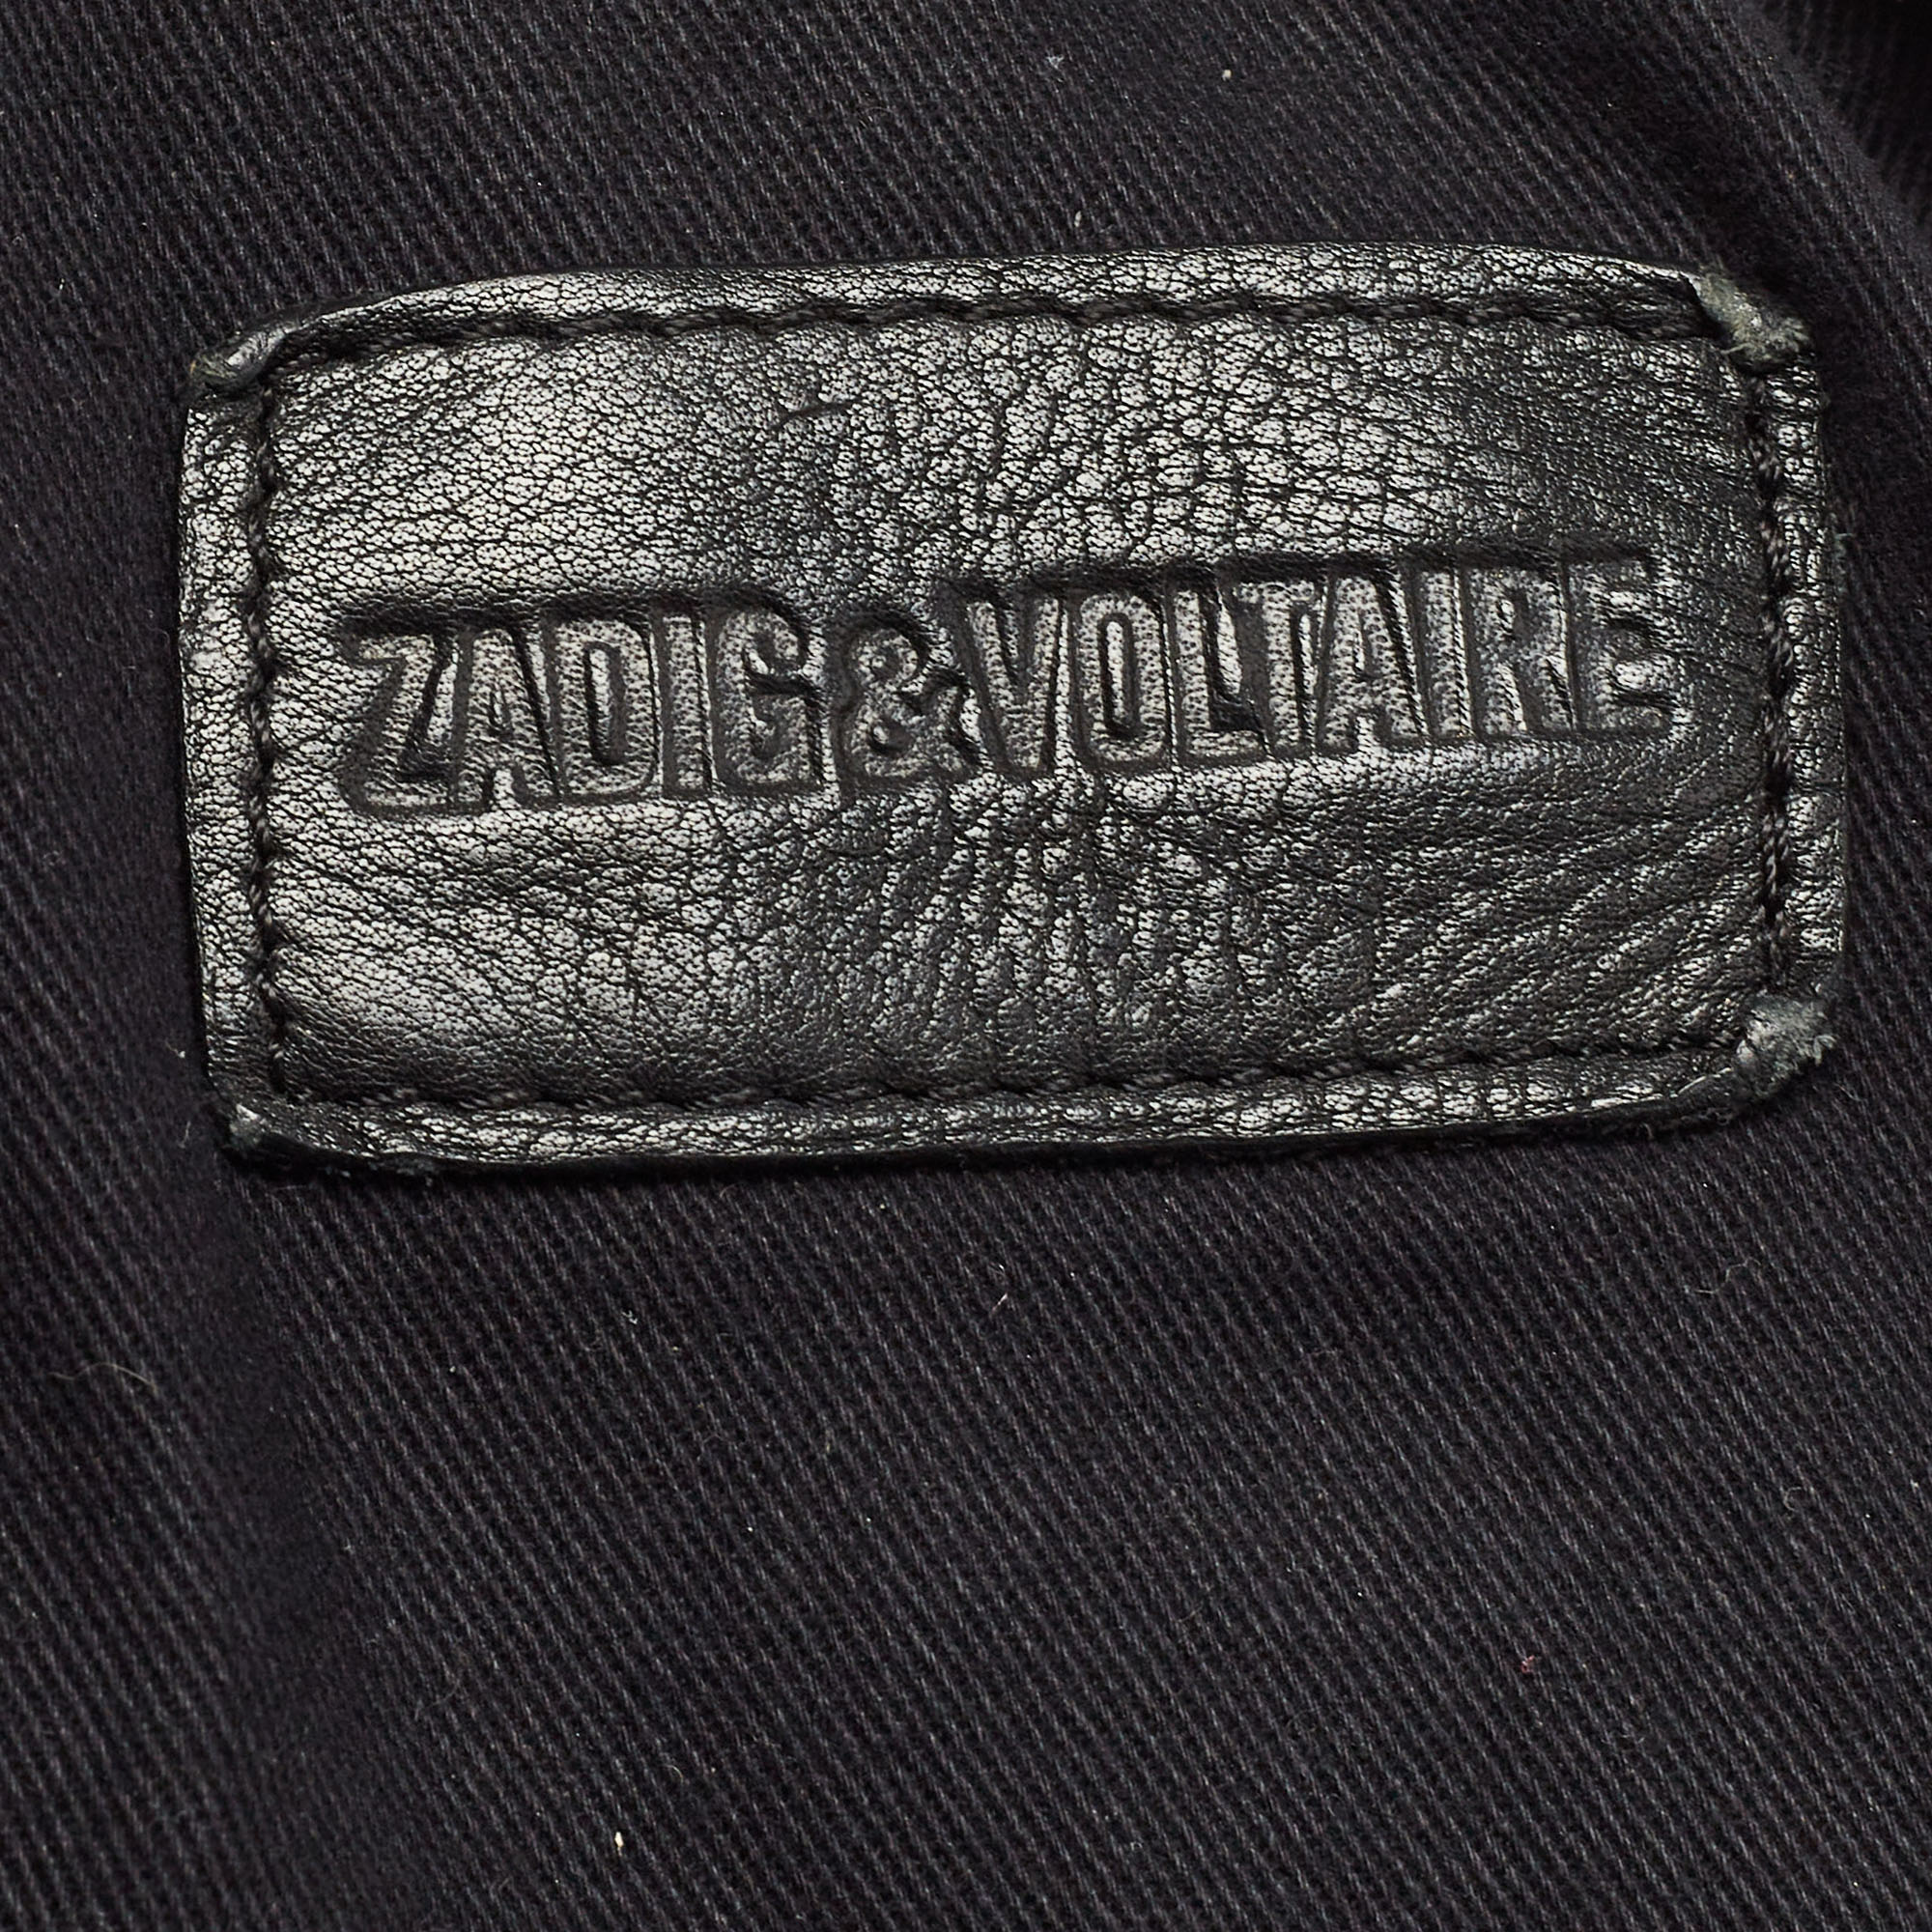 Zadig & Voltaire Black Quilted Leather Rocky Foldover Shoulder Bag